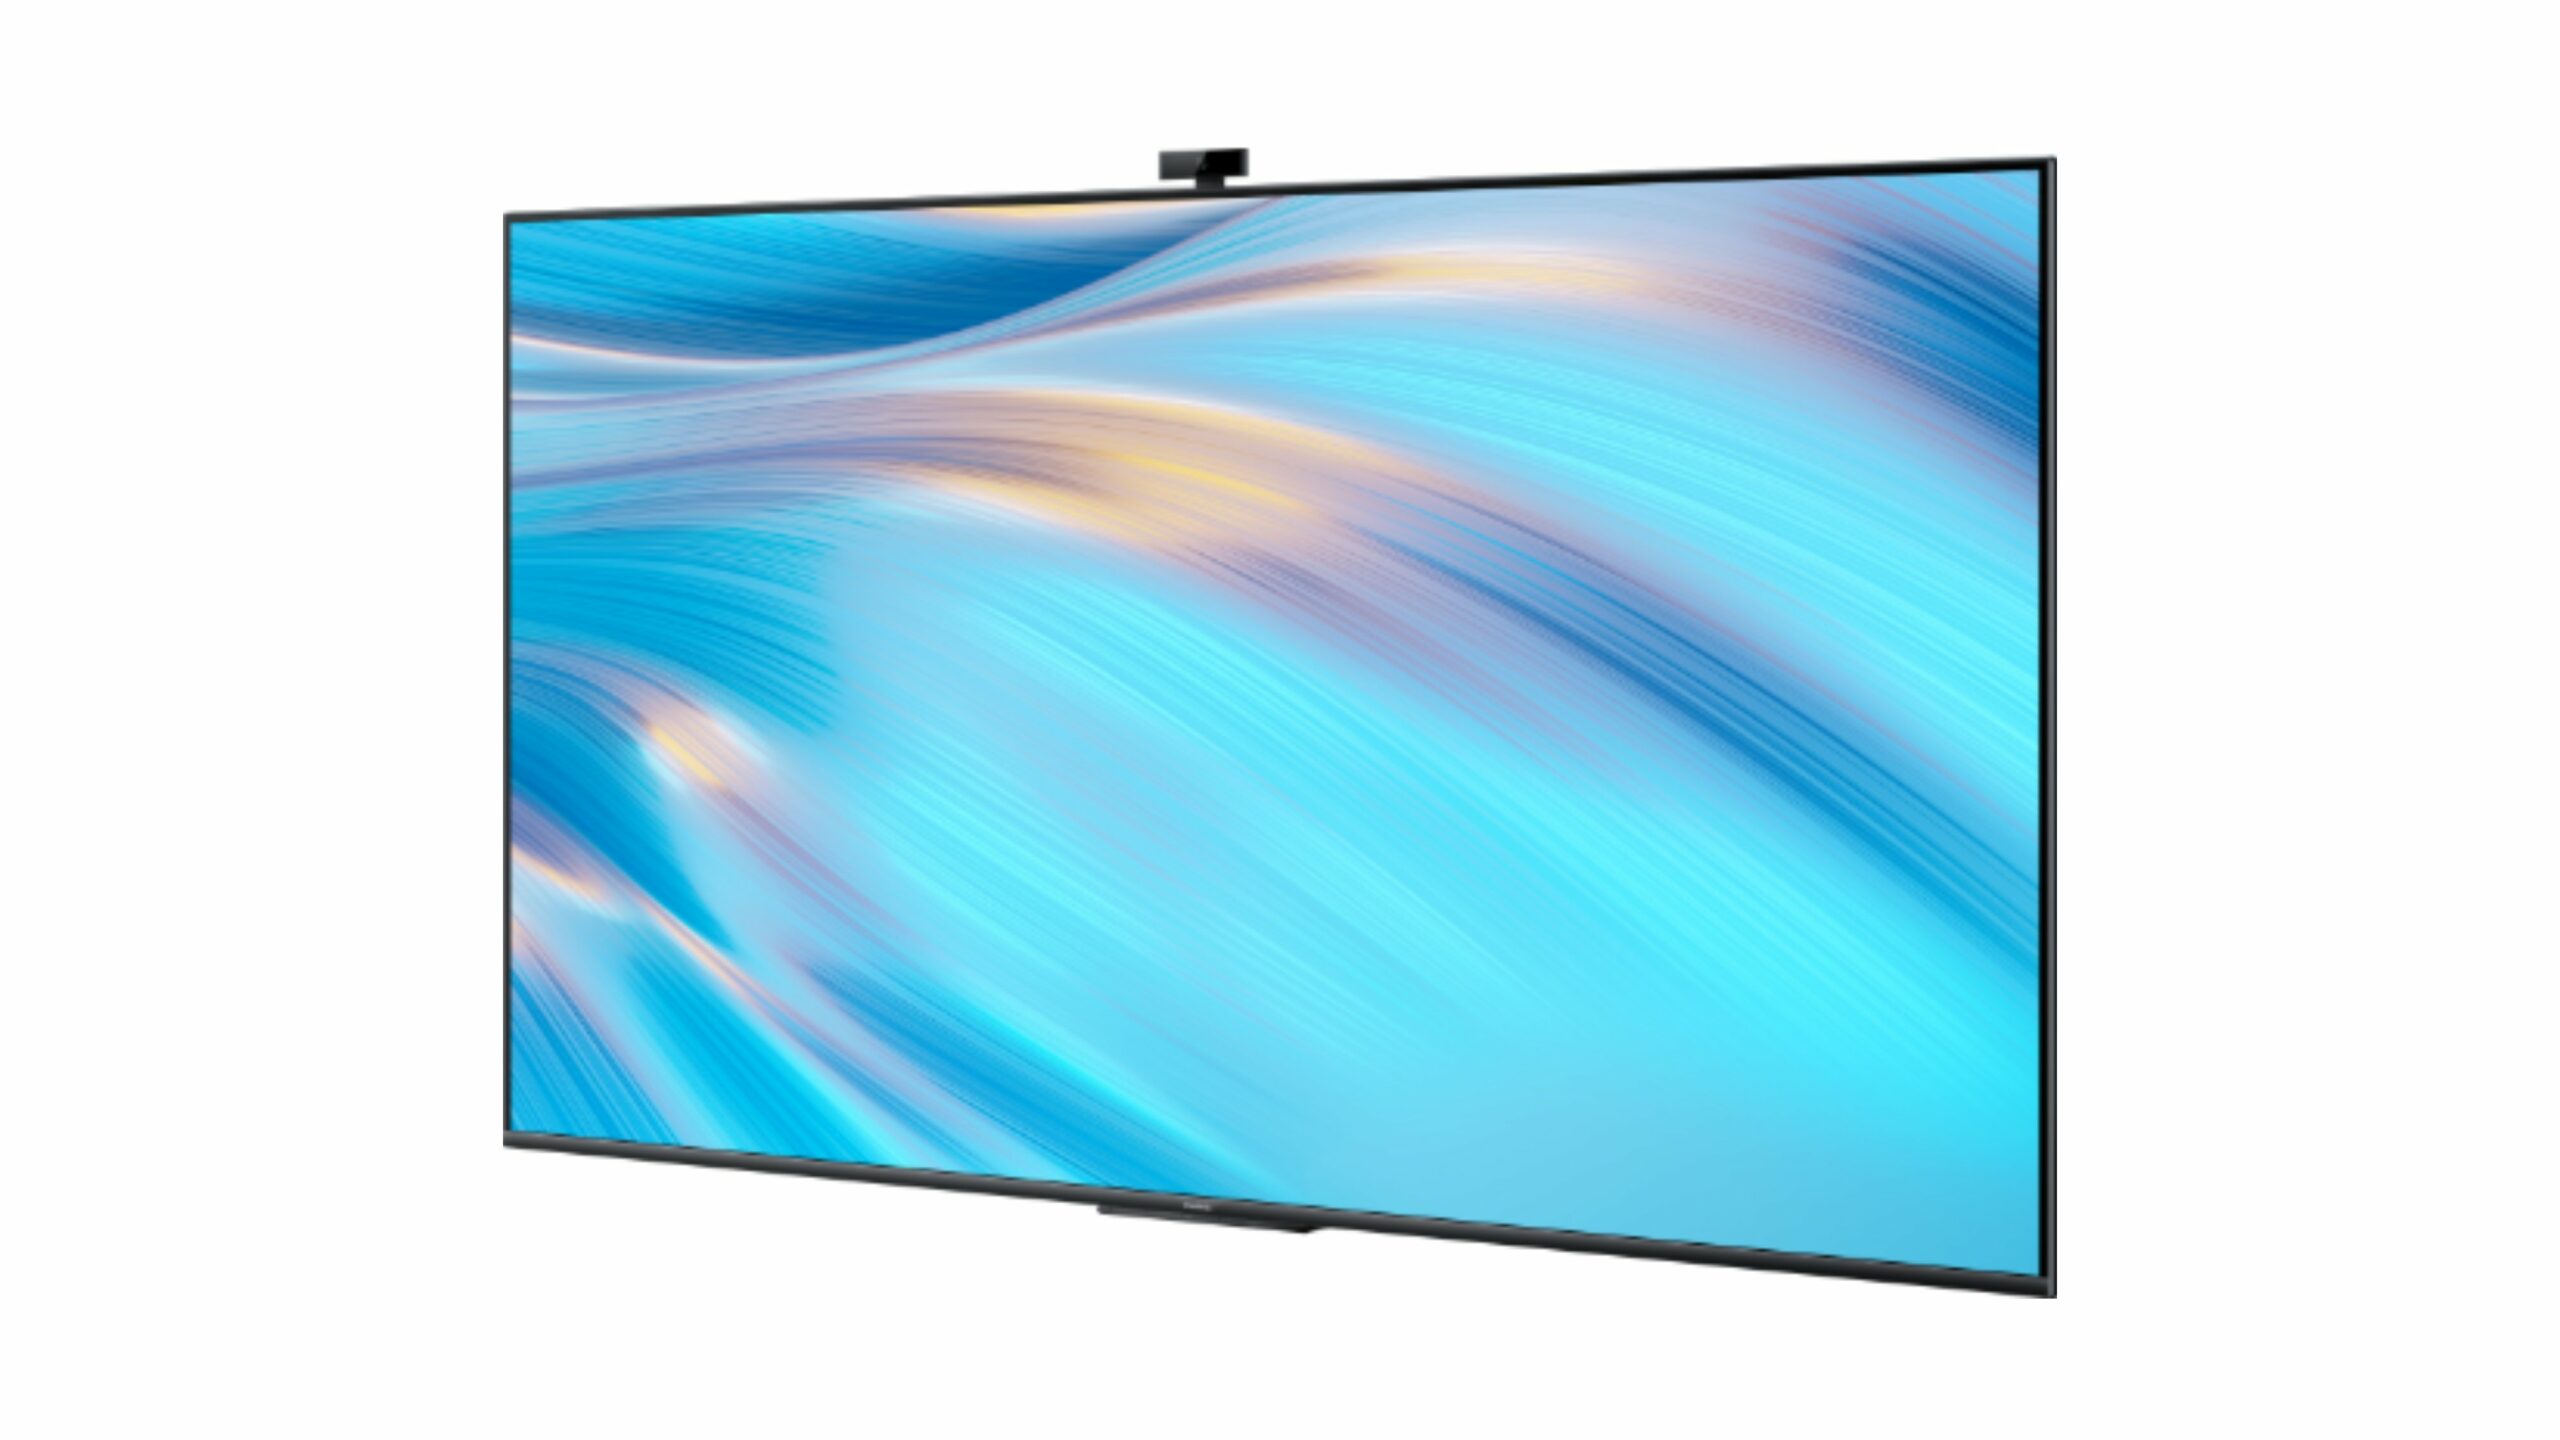 Huawei Smart Screen S Pro අඟල් 65 විශේෂාංගය